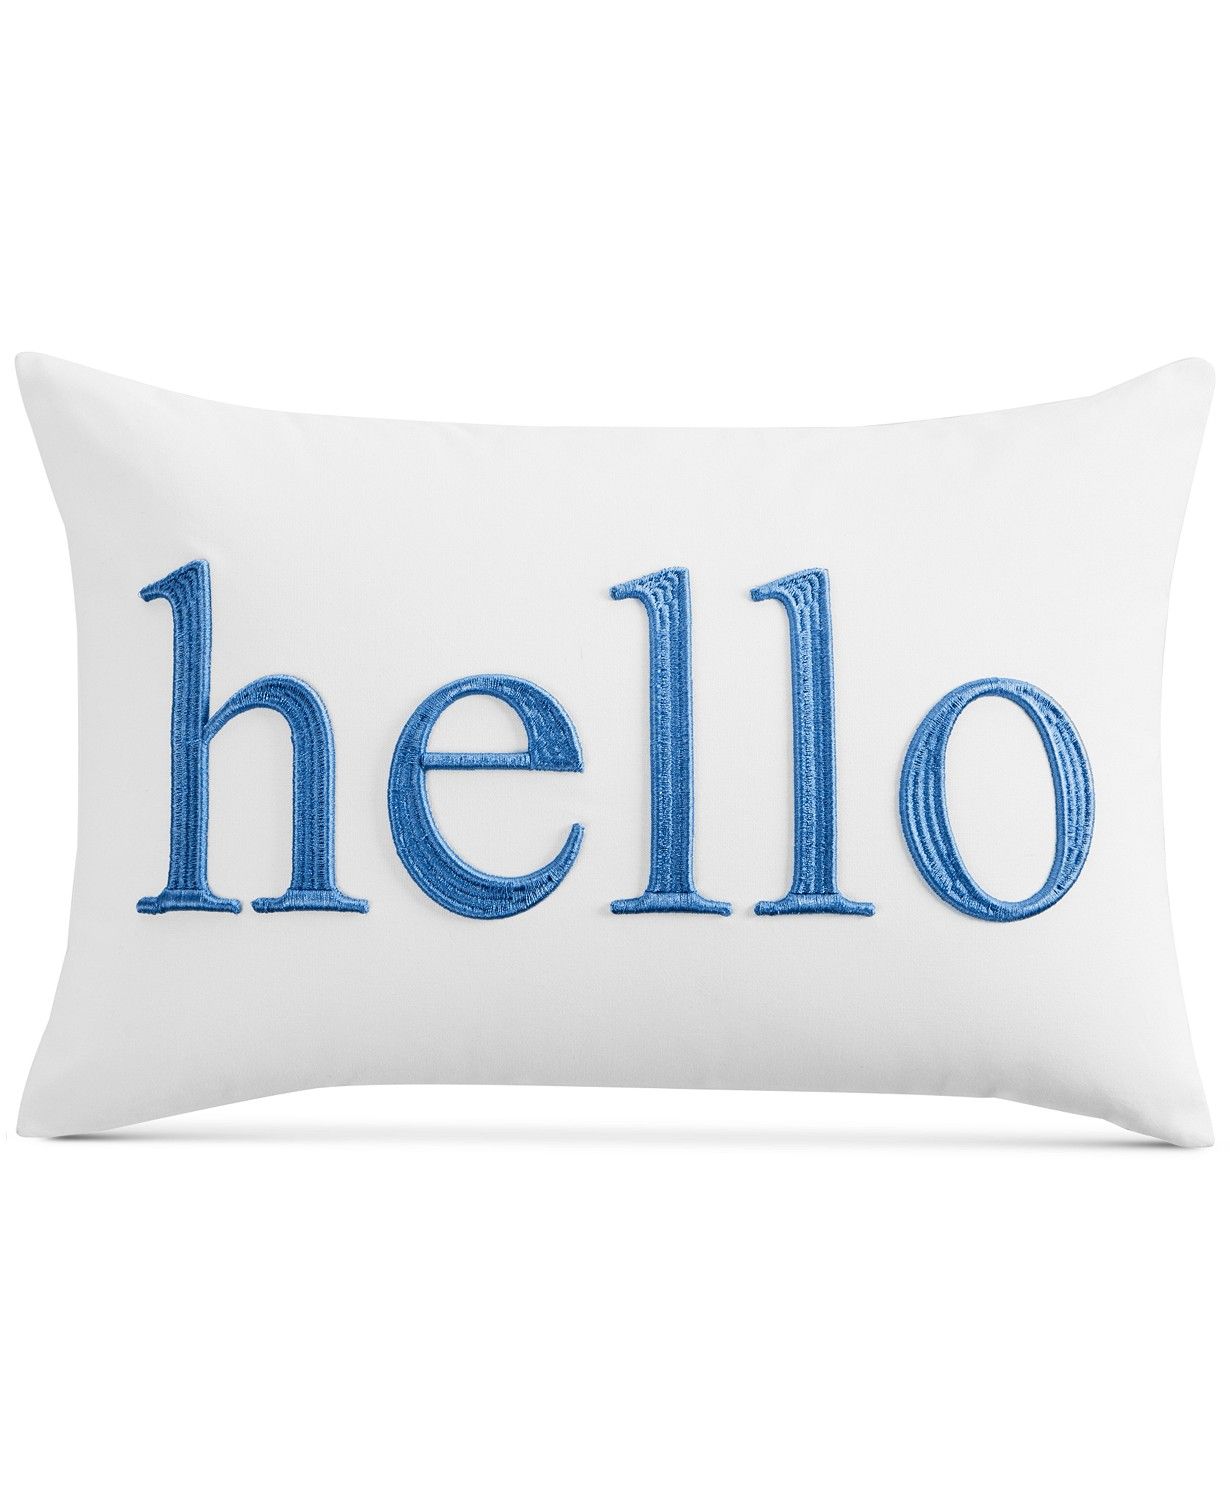 Word 12" x 18" Decorative Pillow, Created for Macy's | Macys (US)